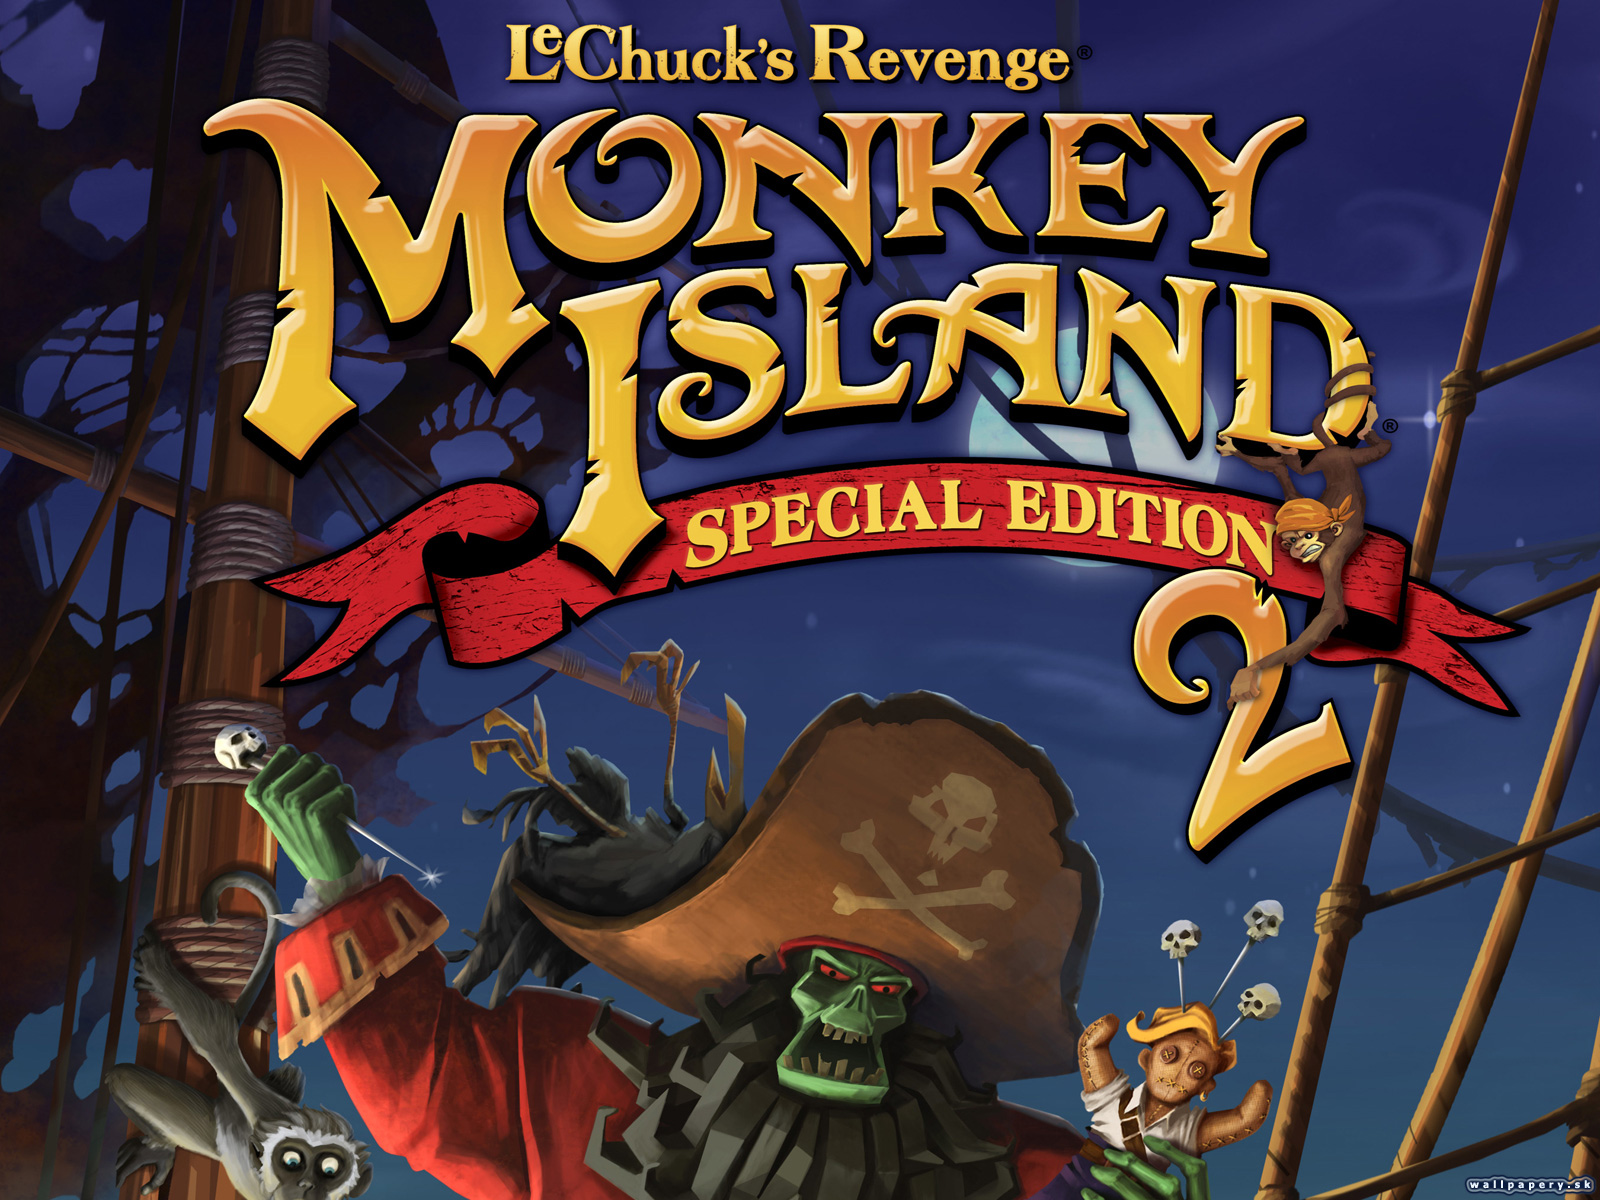 Monkey island 2. Monkey Island 2 Special Edition le Chuck s Revenge. Monkey Island 2 Special Edition : LECHUCK’S Revenge. Monkey Island 2 Special Edition: LECHUCK'S. Monkey Island 2 Special Edition Review.